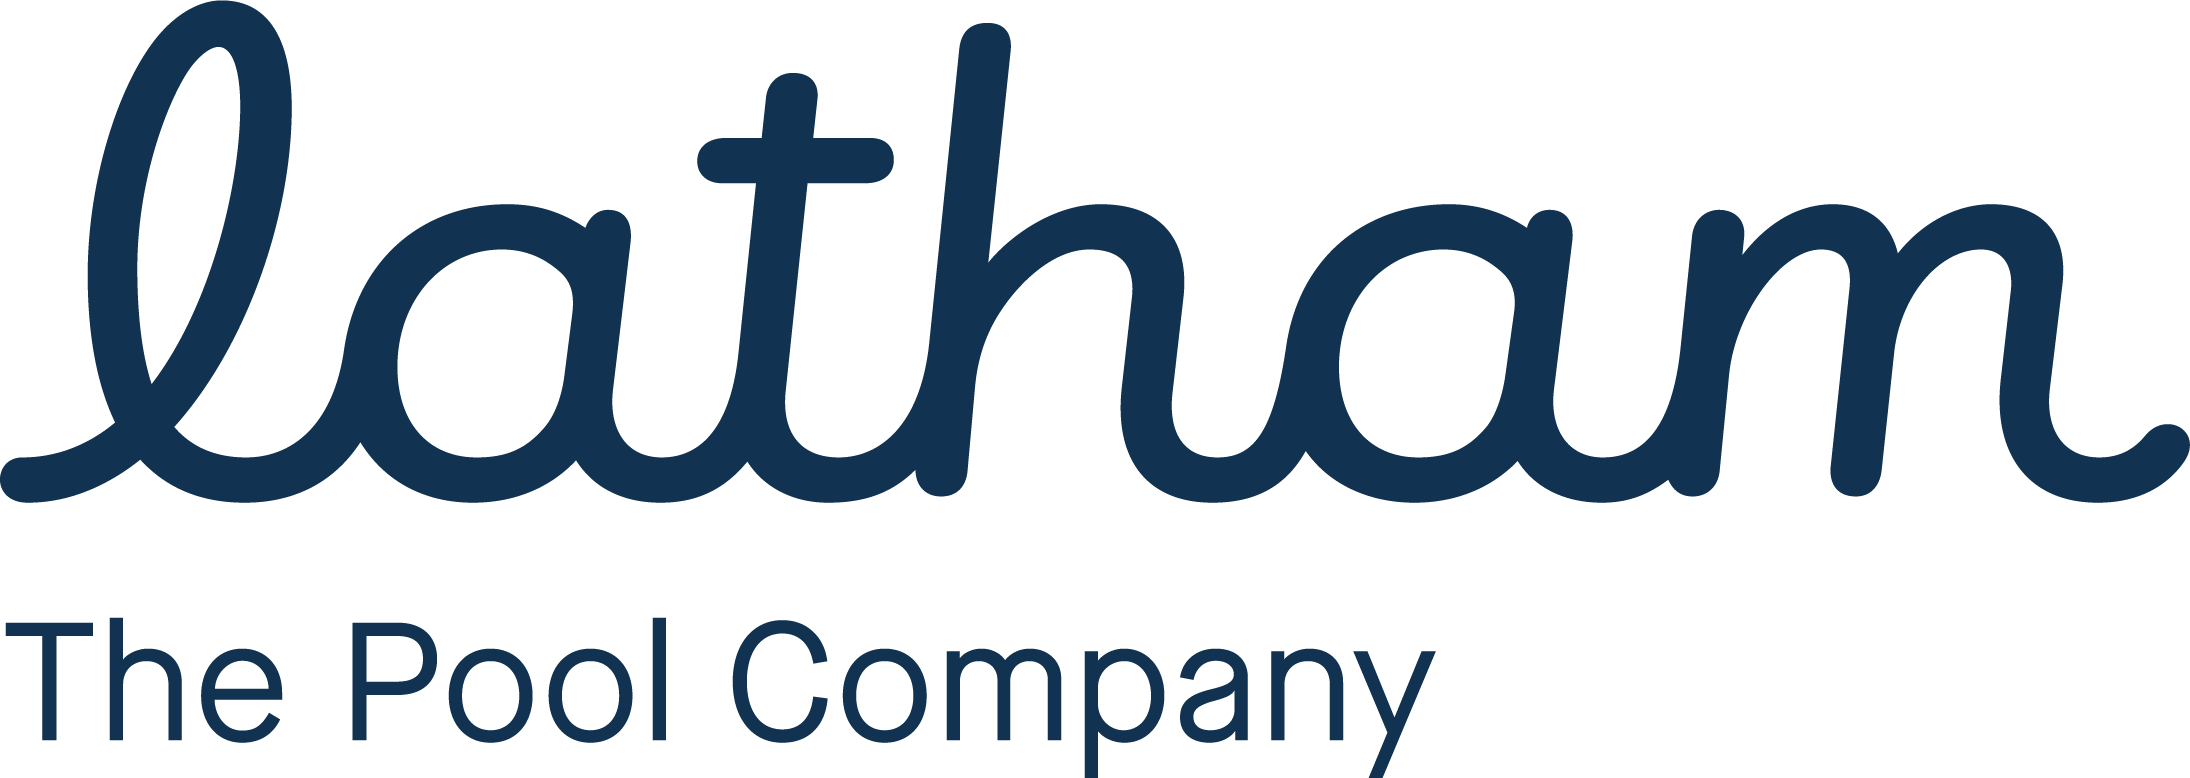 Latham logo